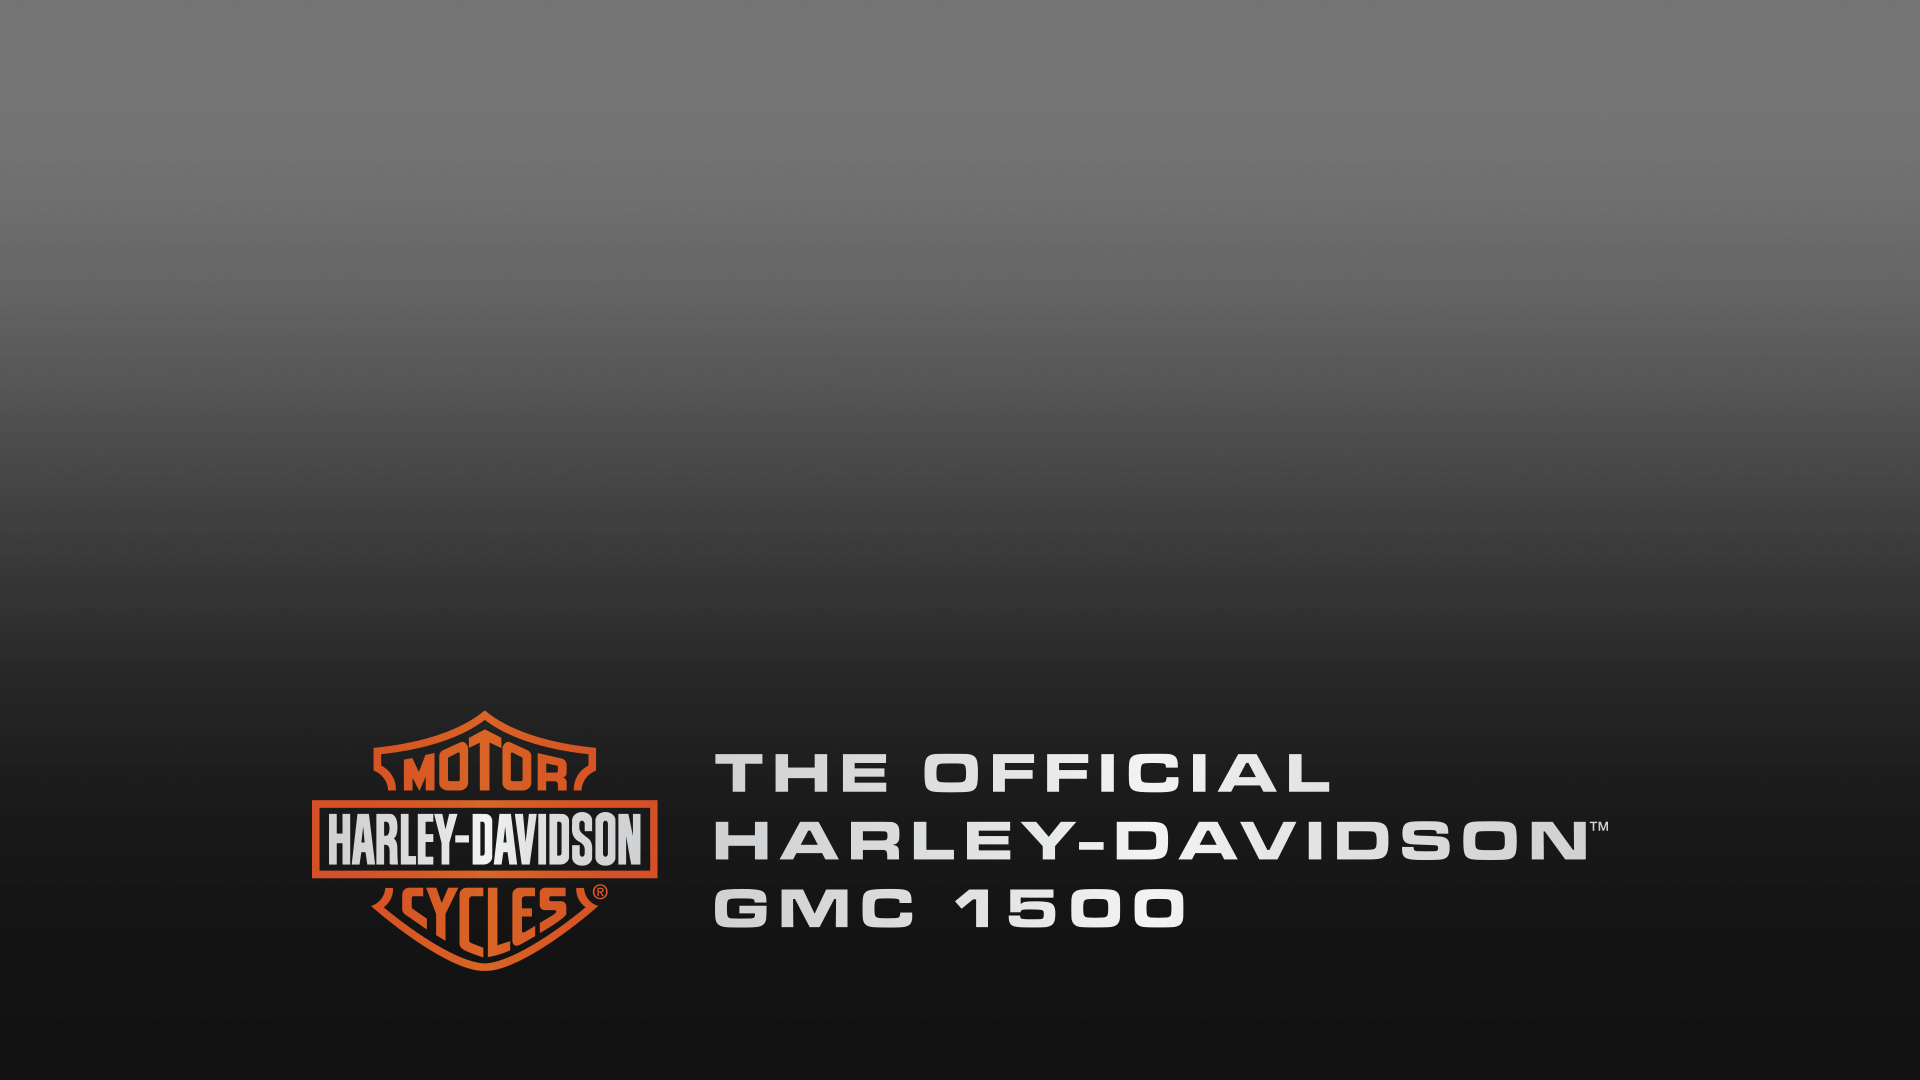 Harley-Davidson GMC Features